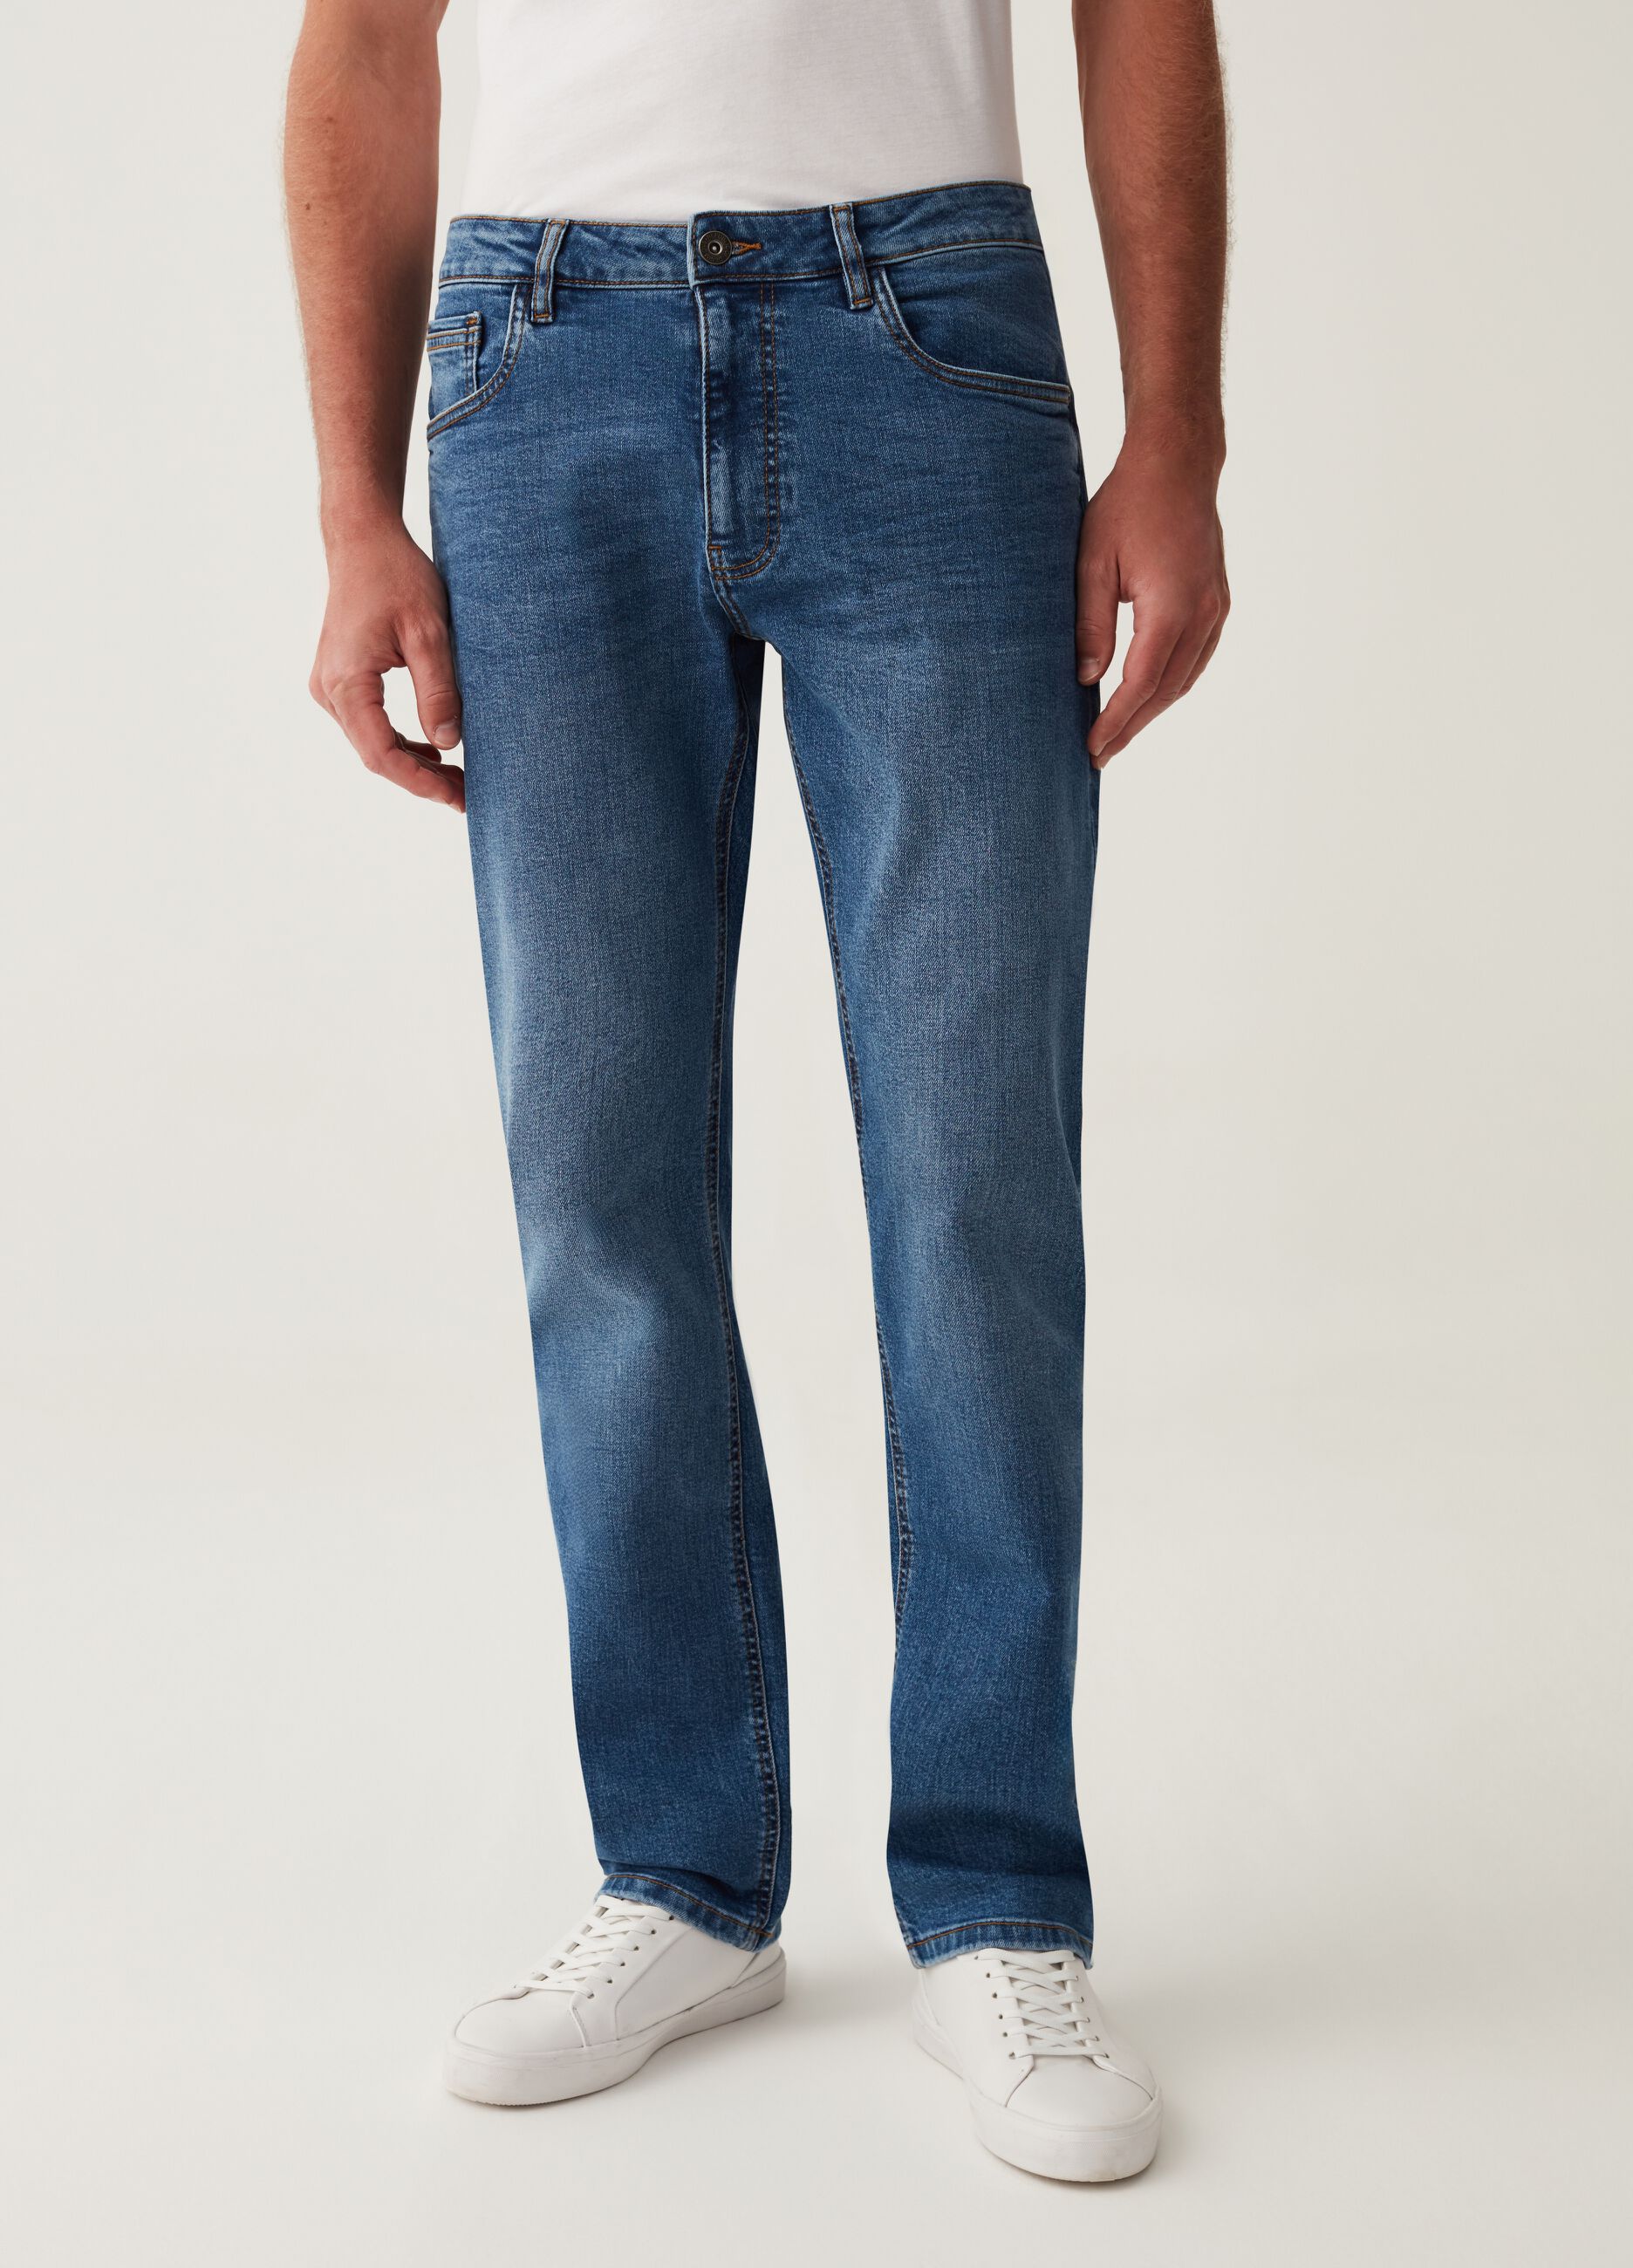 Jeans comfort fit cinque tasche